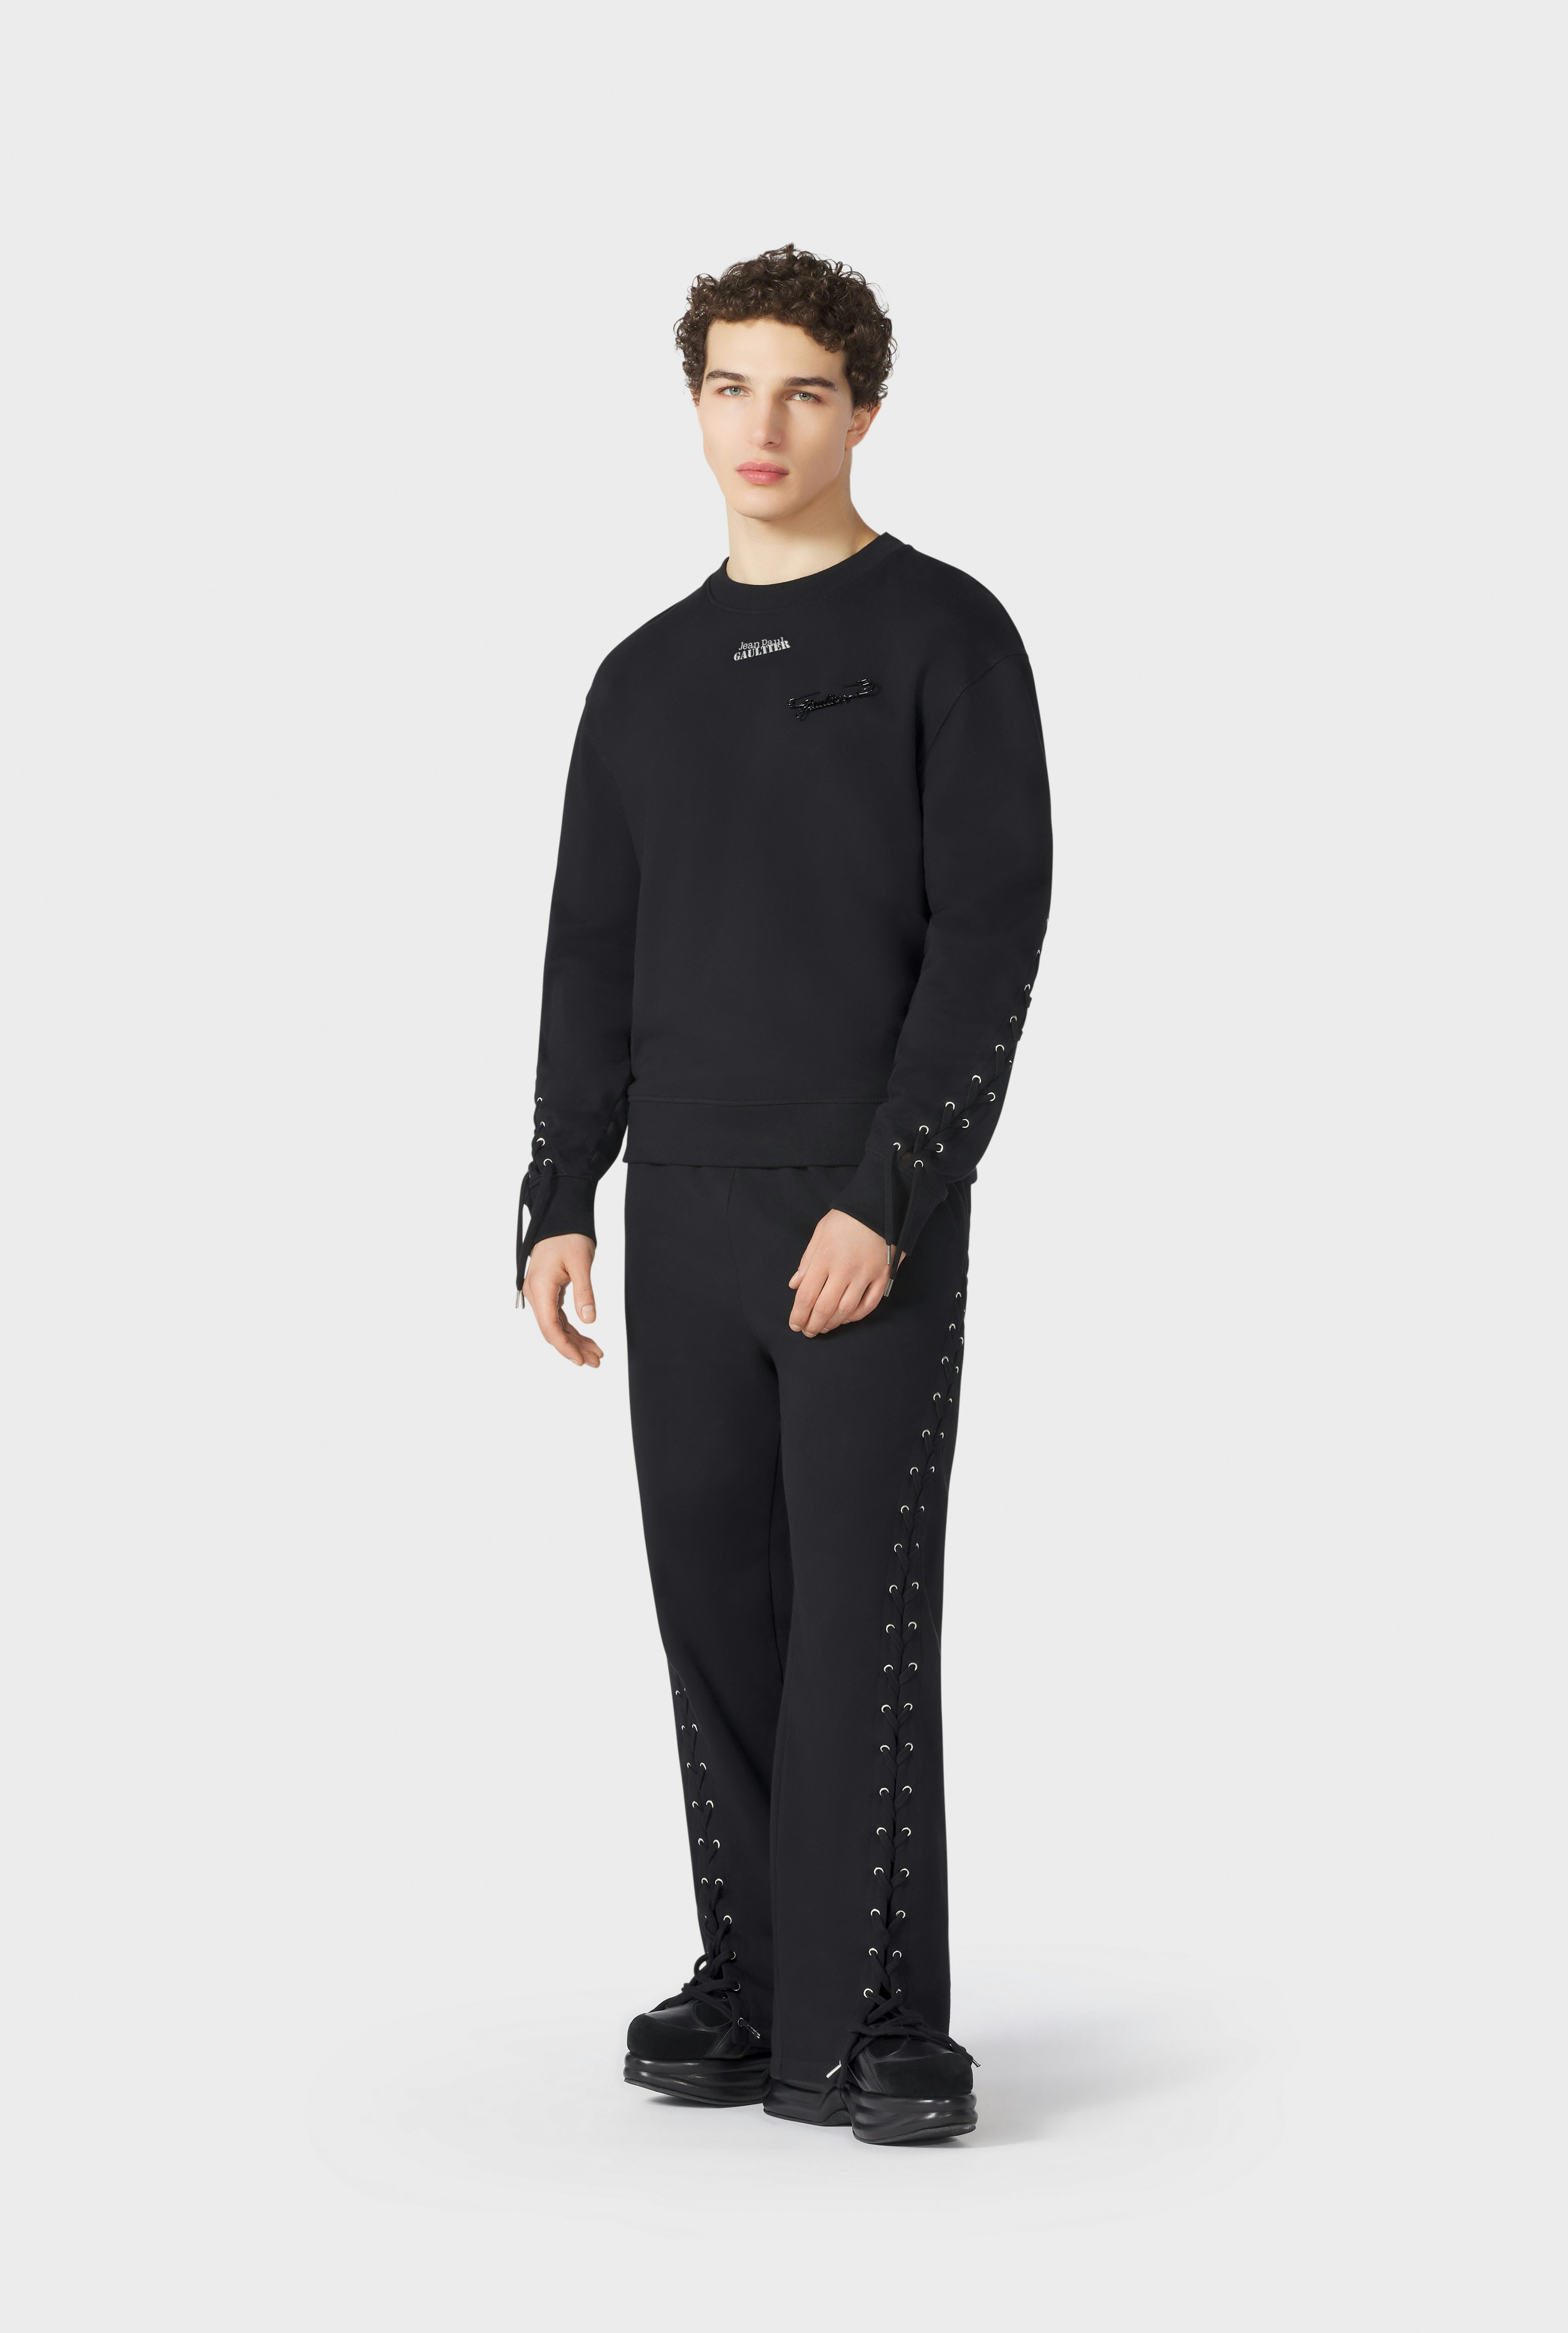 The Black Lace-Up JPG Sweatshirt